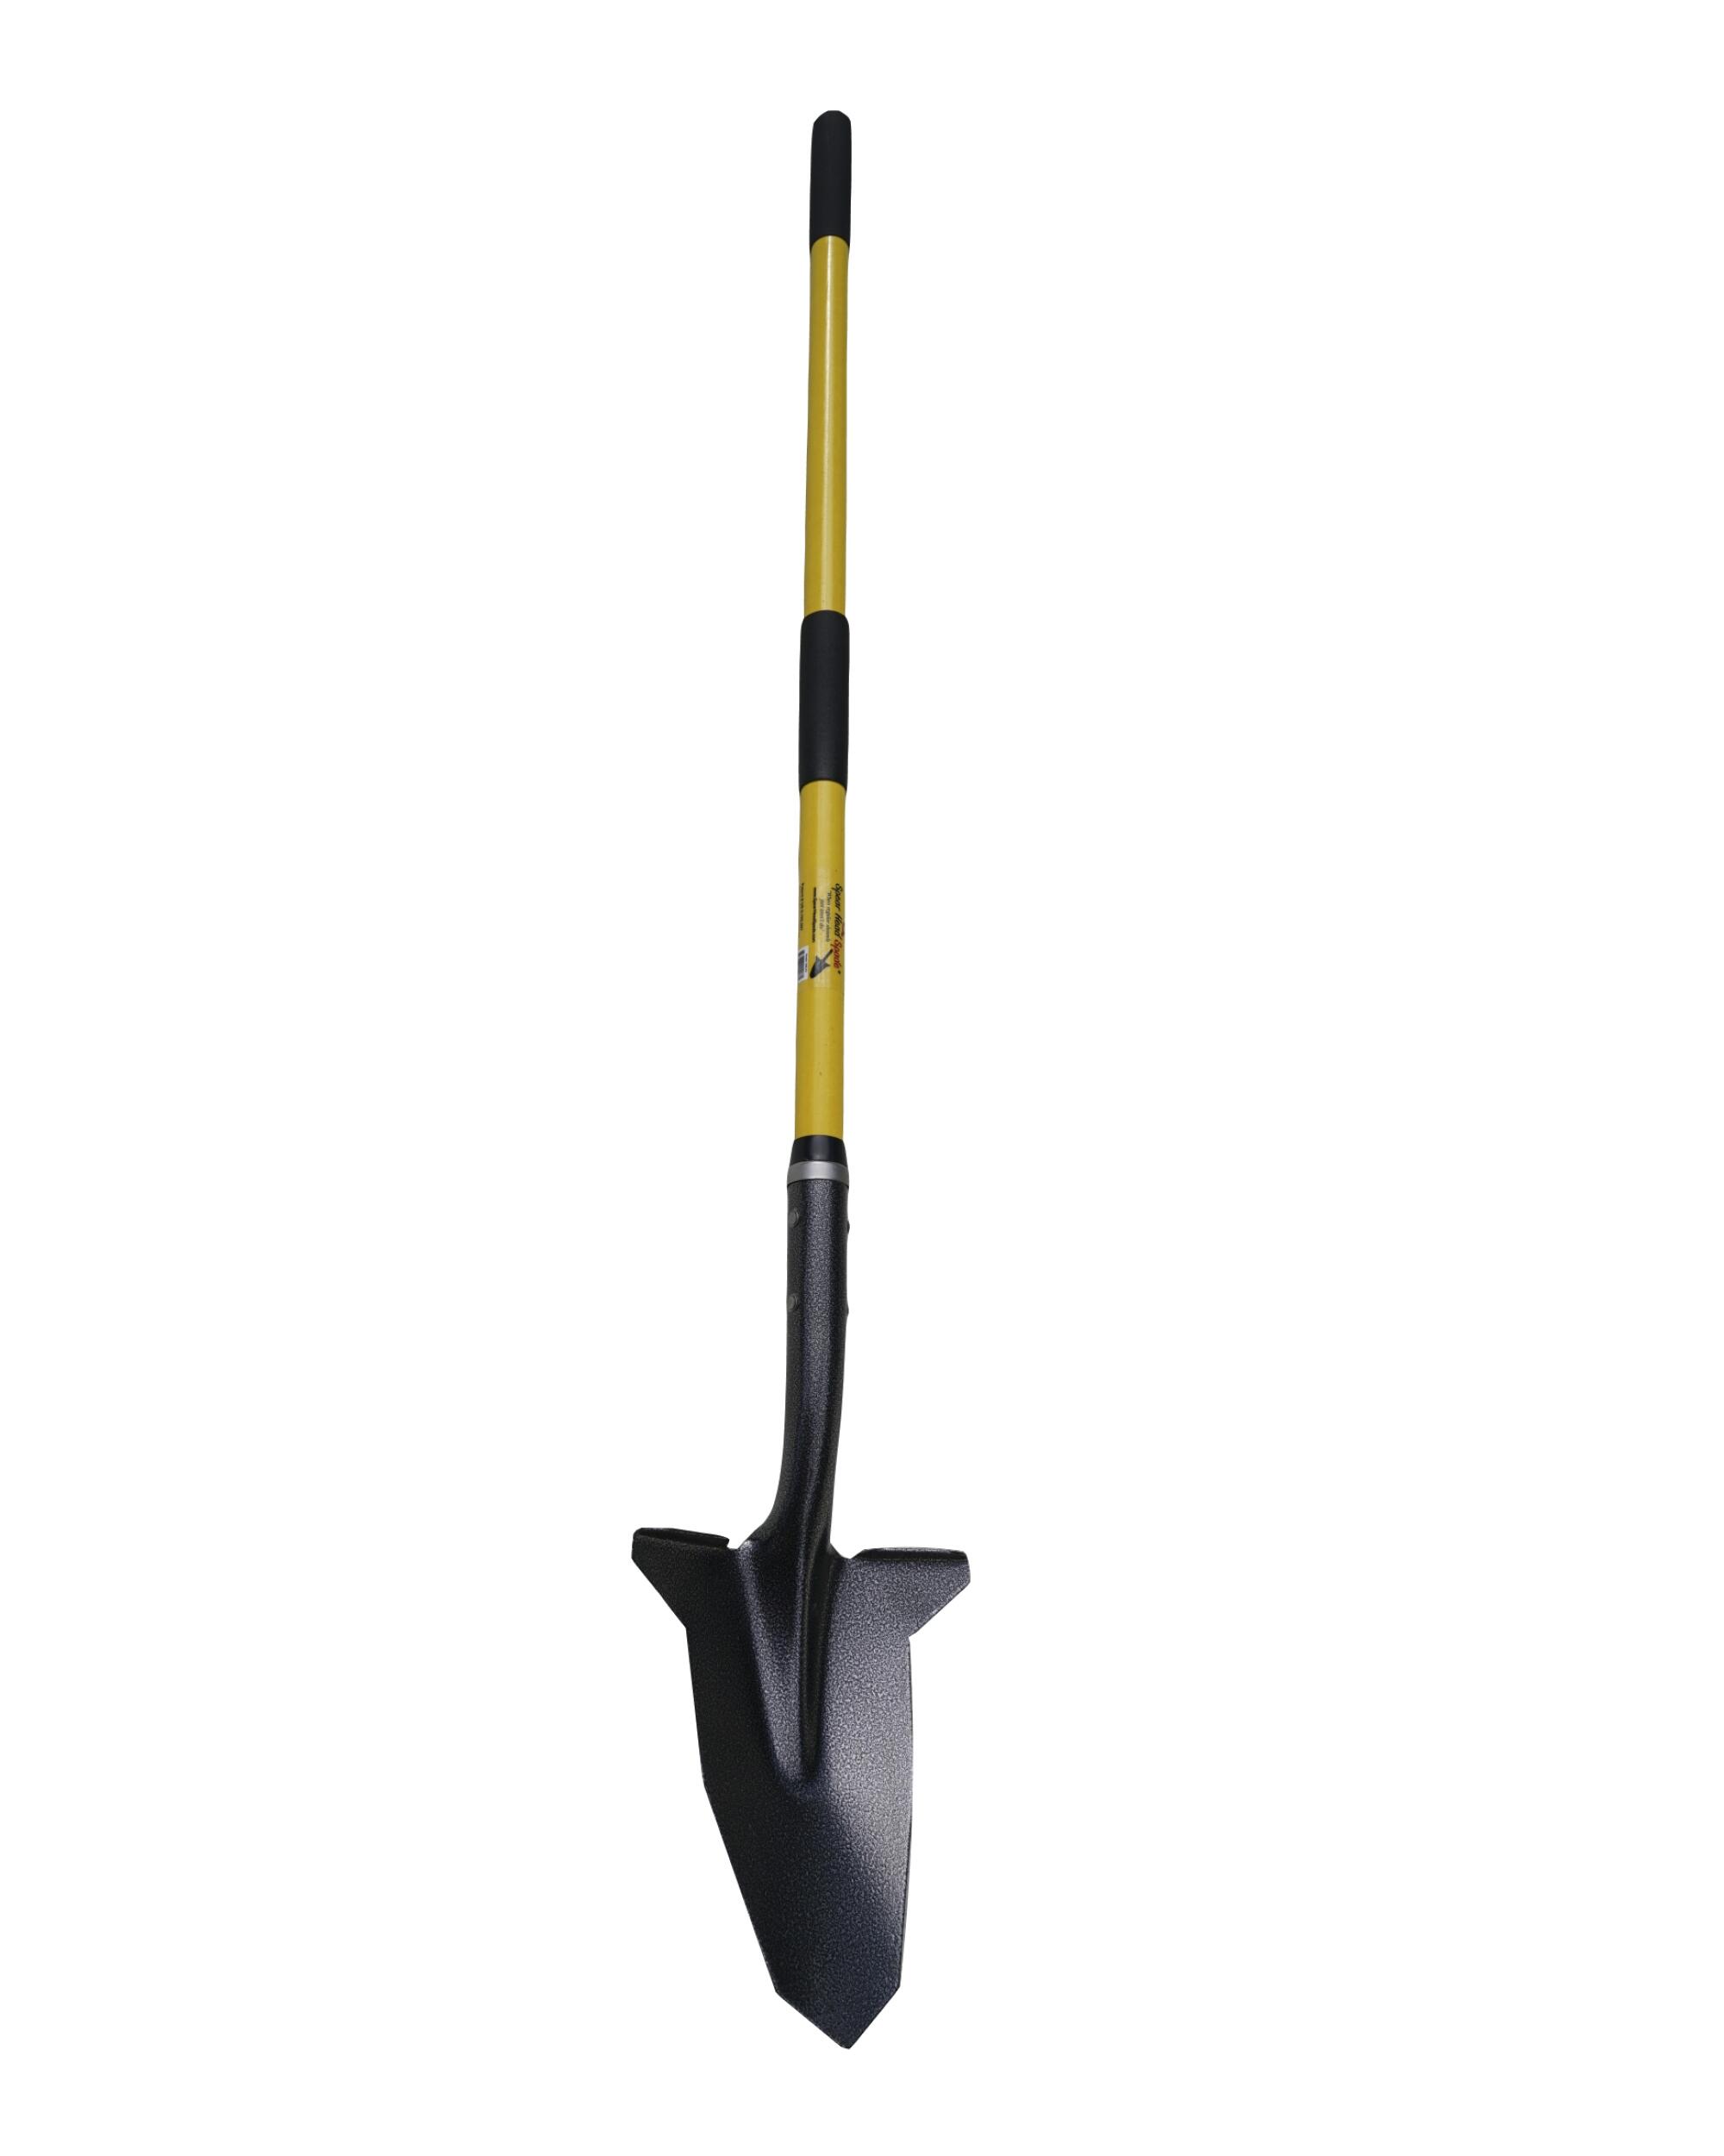 Corona Tools Spear Head Spade with long handle